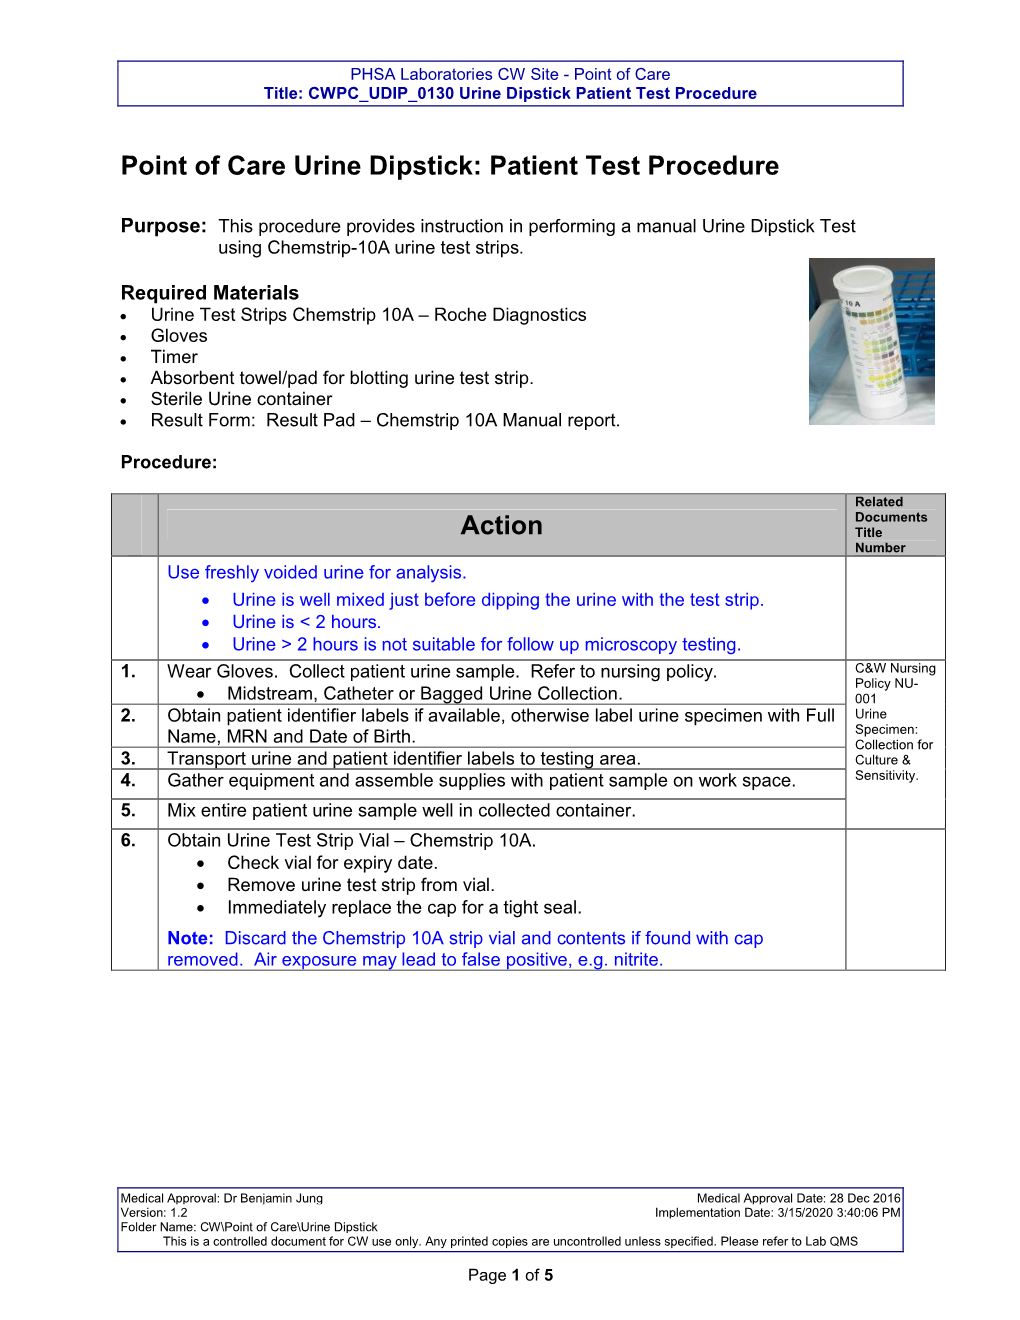 Point of Care Urine Dipstick: Patient Test Procedure Action